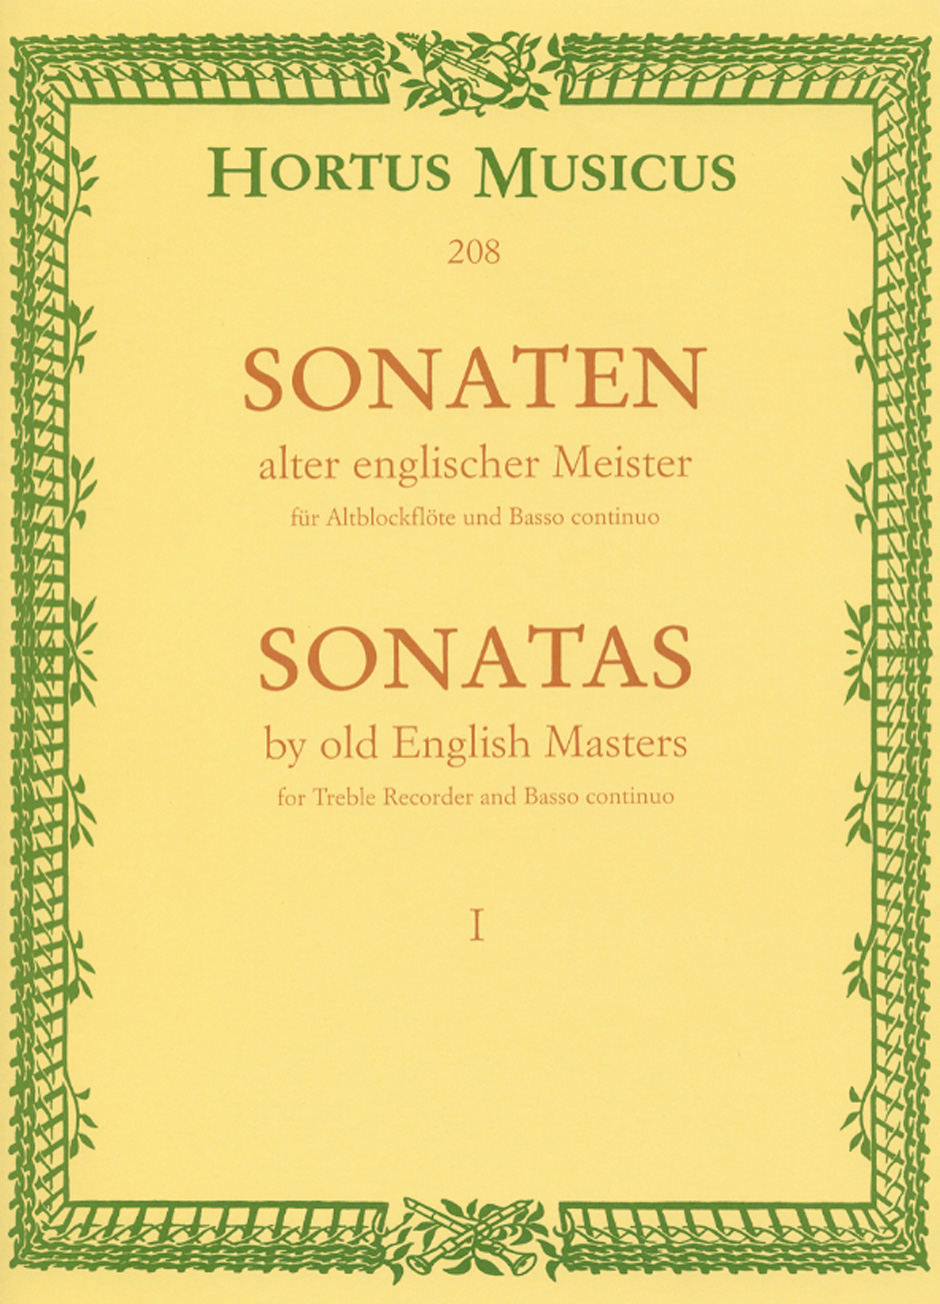 Sonaten Alter Englischer Meister 1: Treble Recorder: Score and Parts